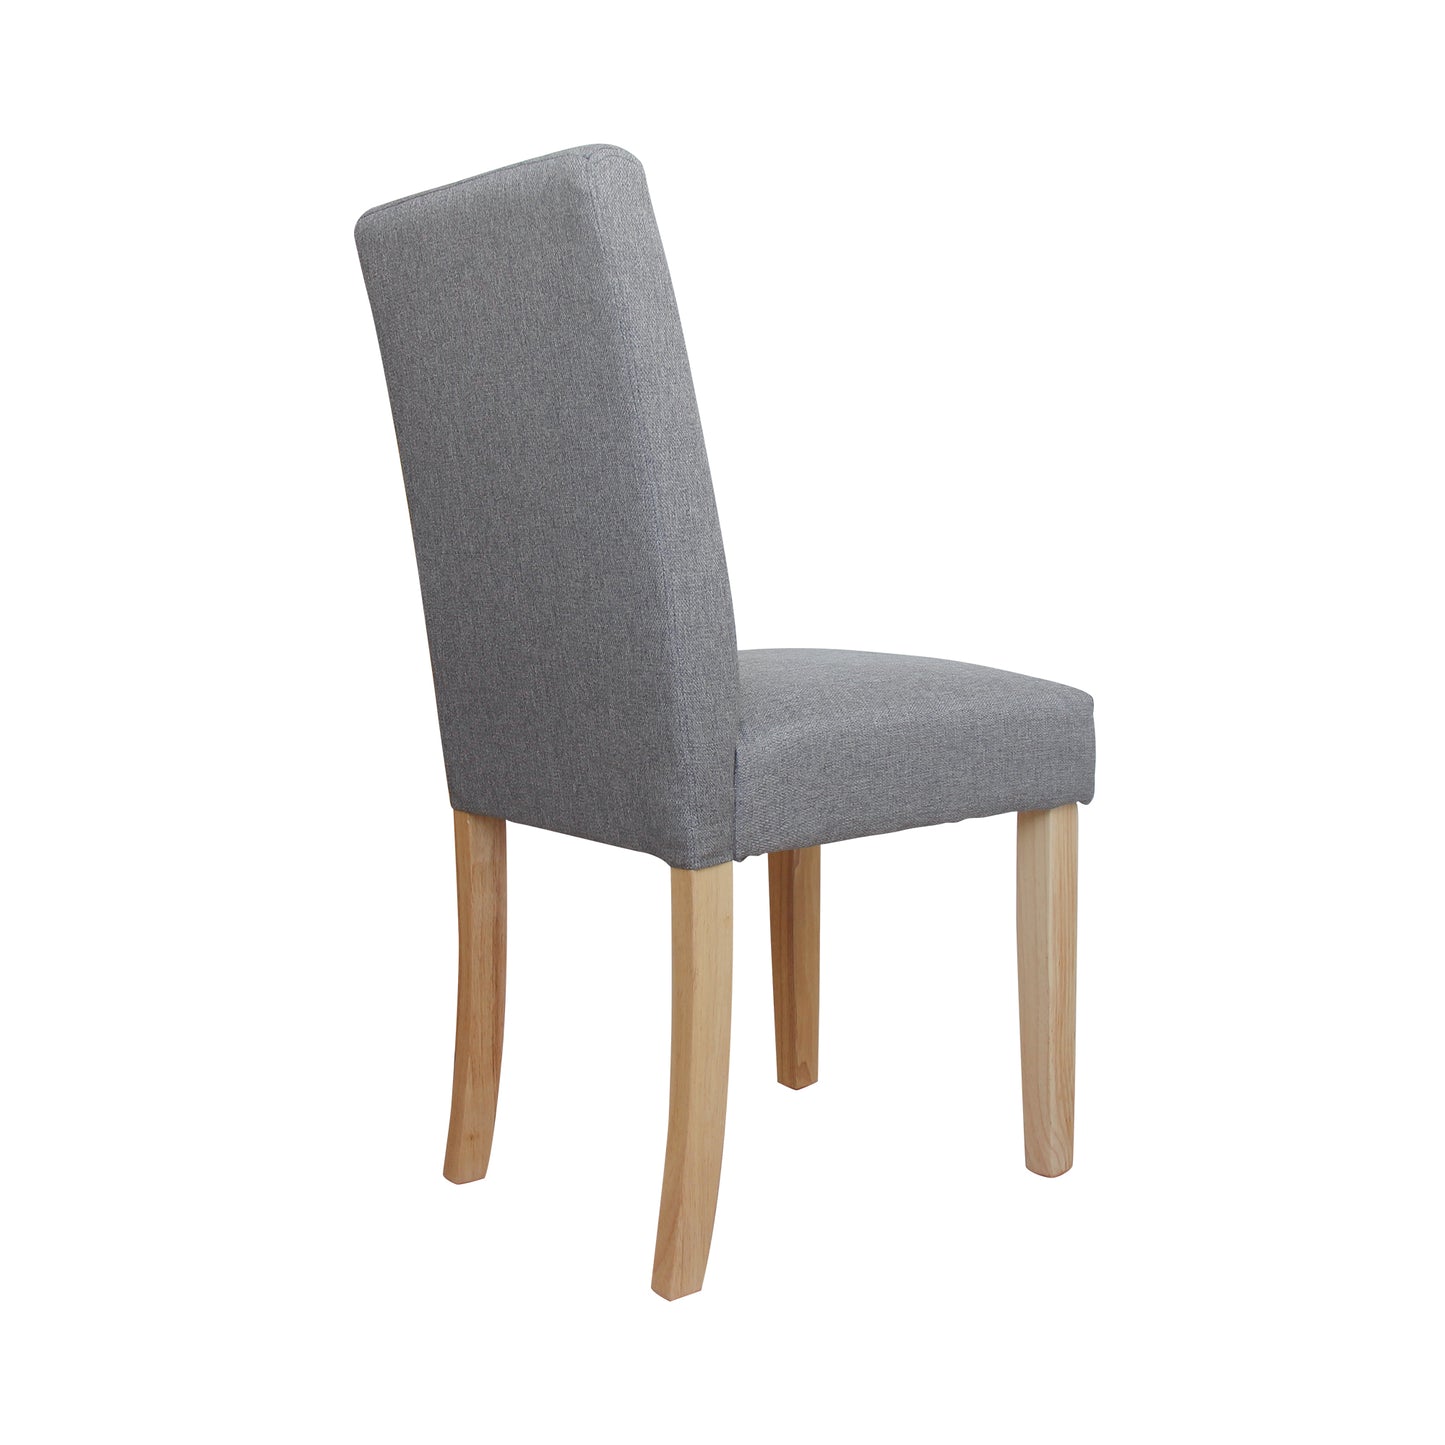 CHOTTO - Sato Fabric High Back Sofa Dining Chairs x 2